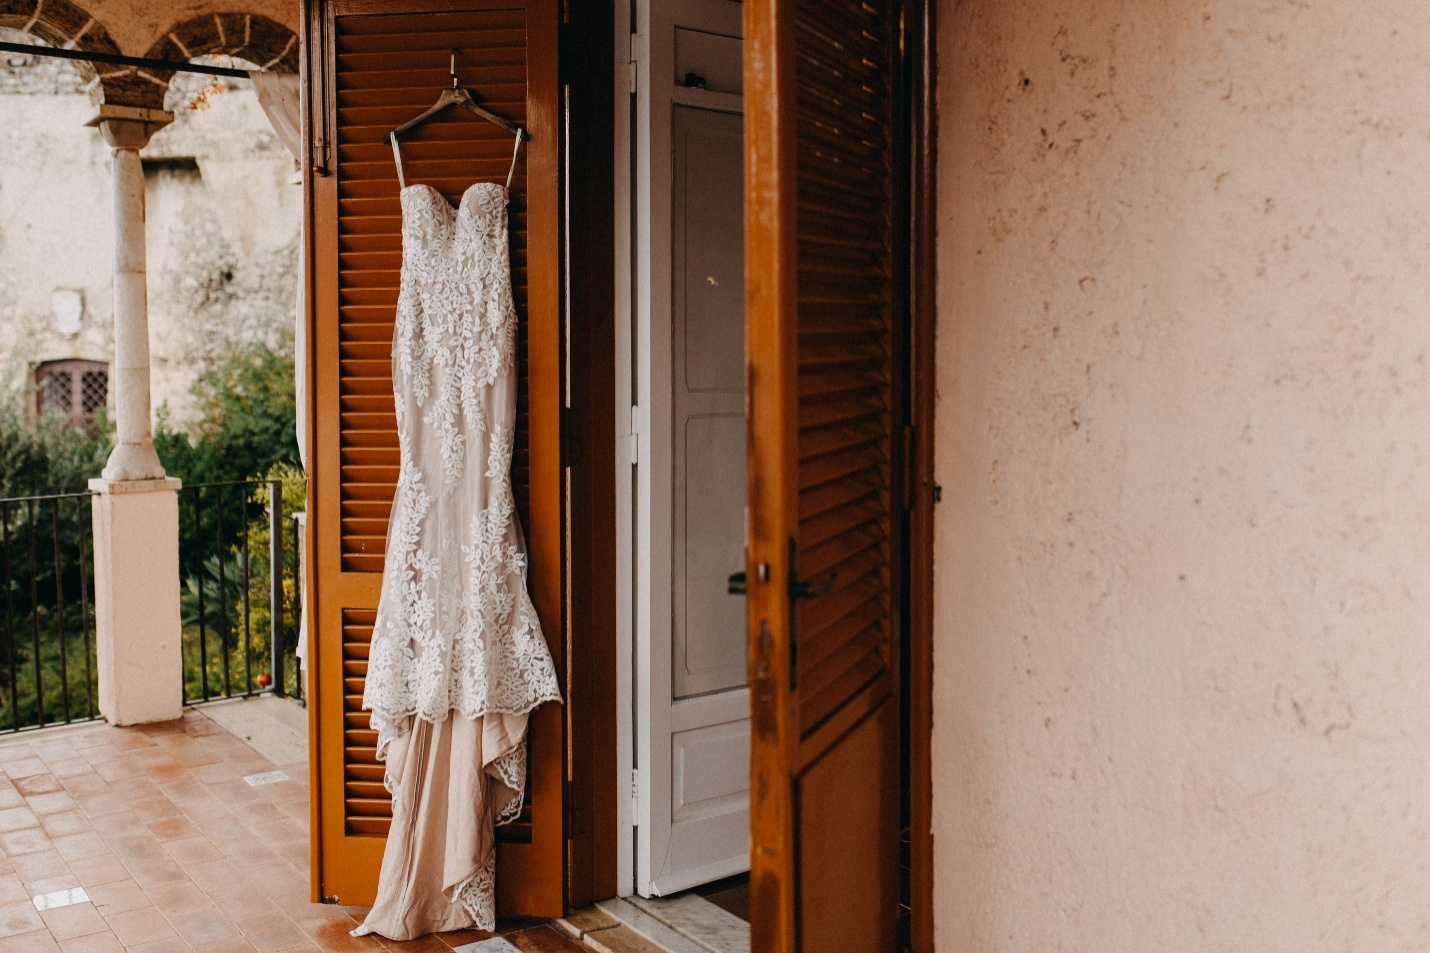 A wedding dress hanging from a wooden door